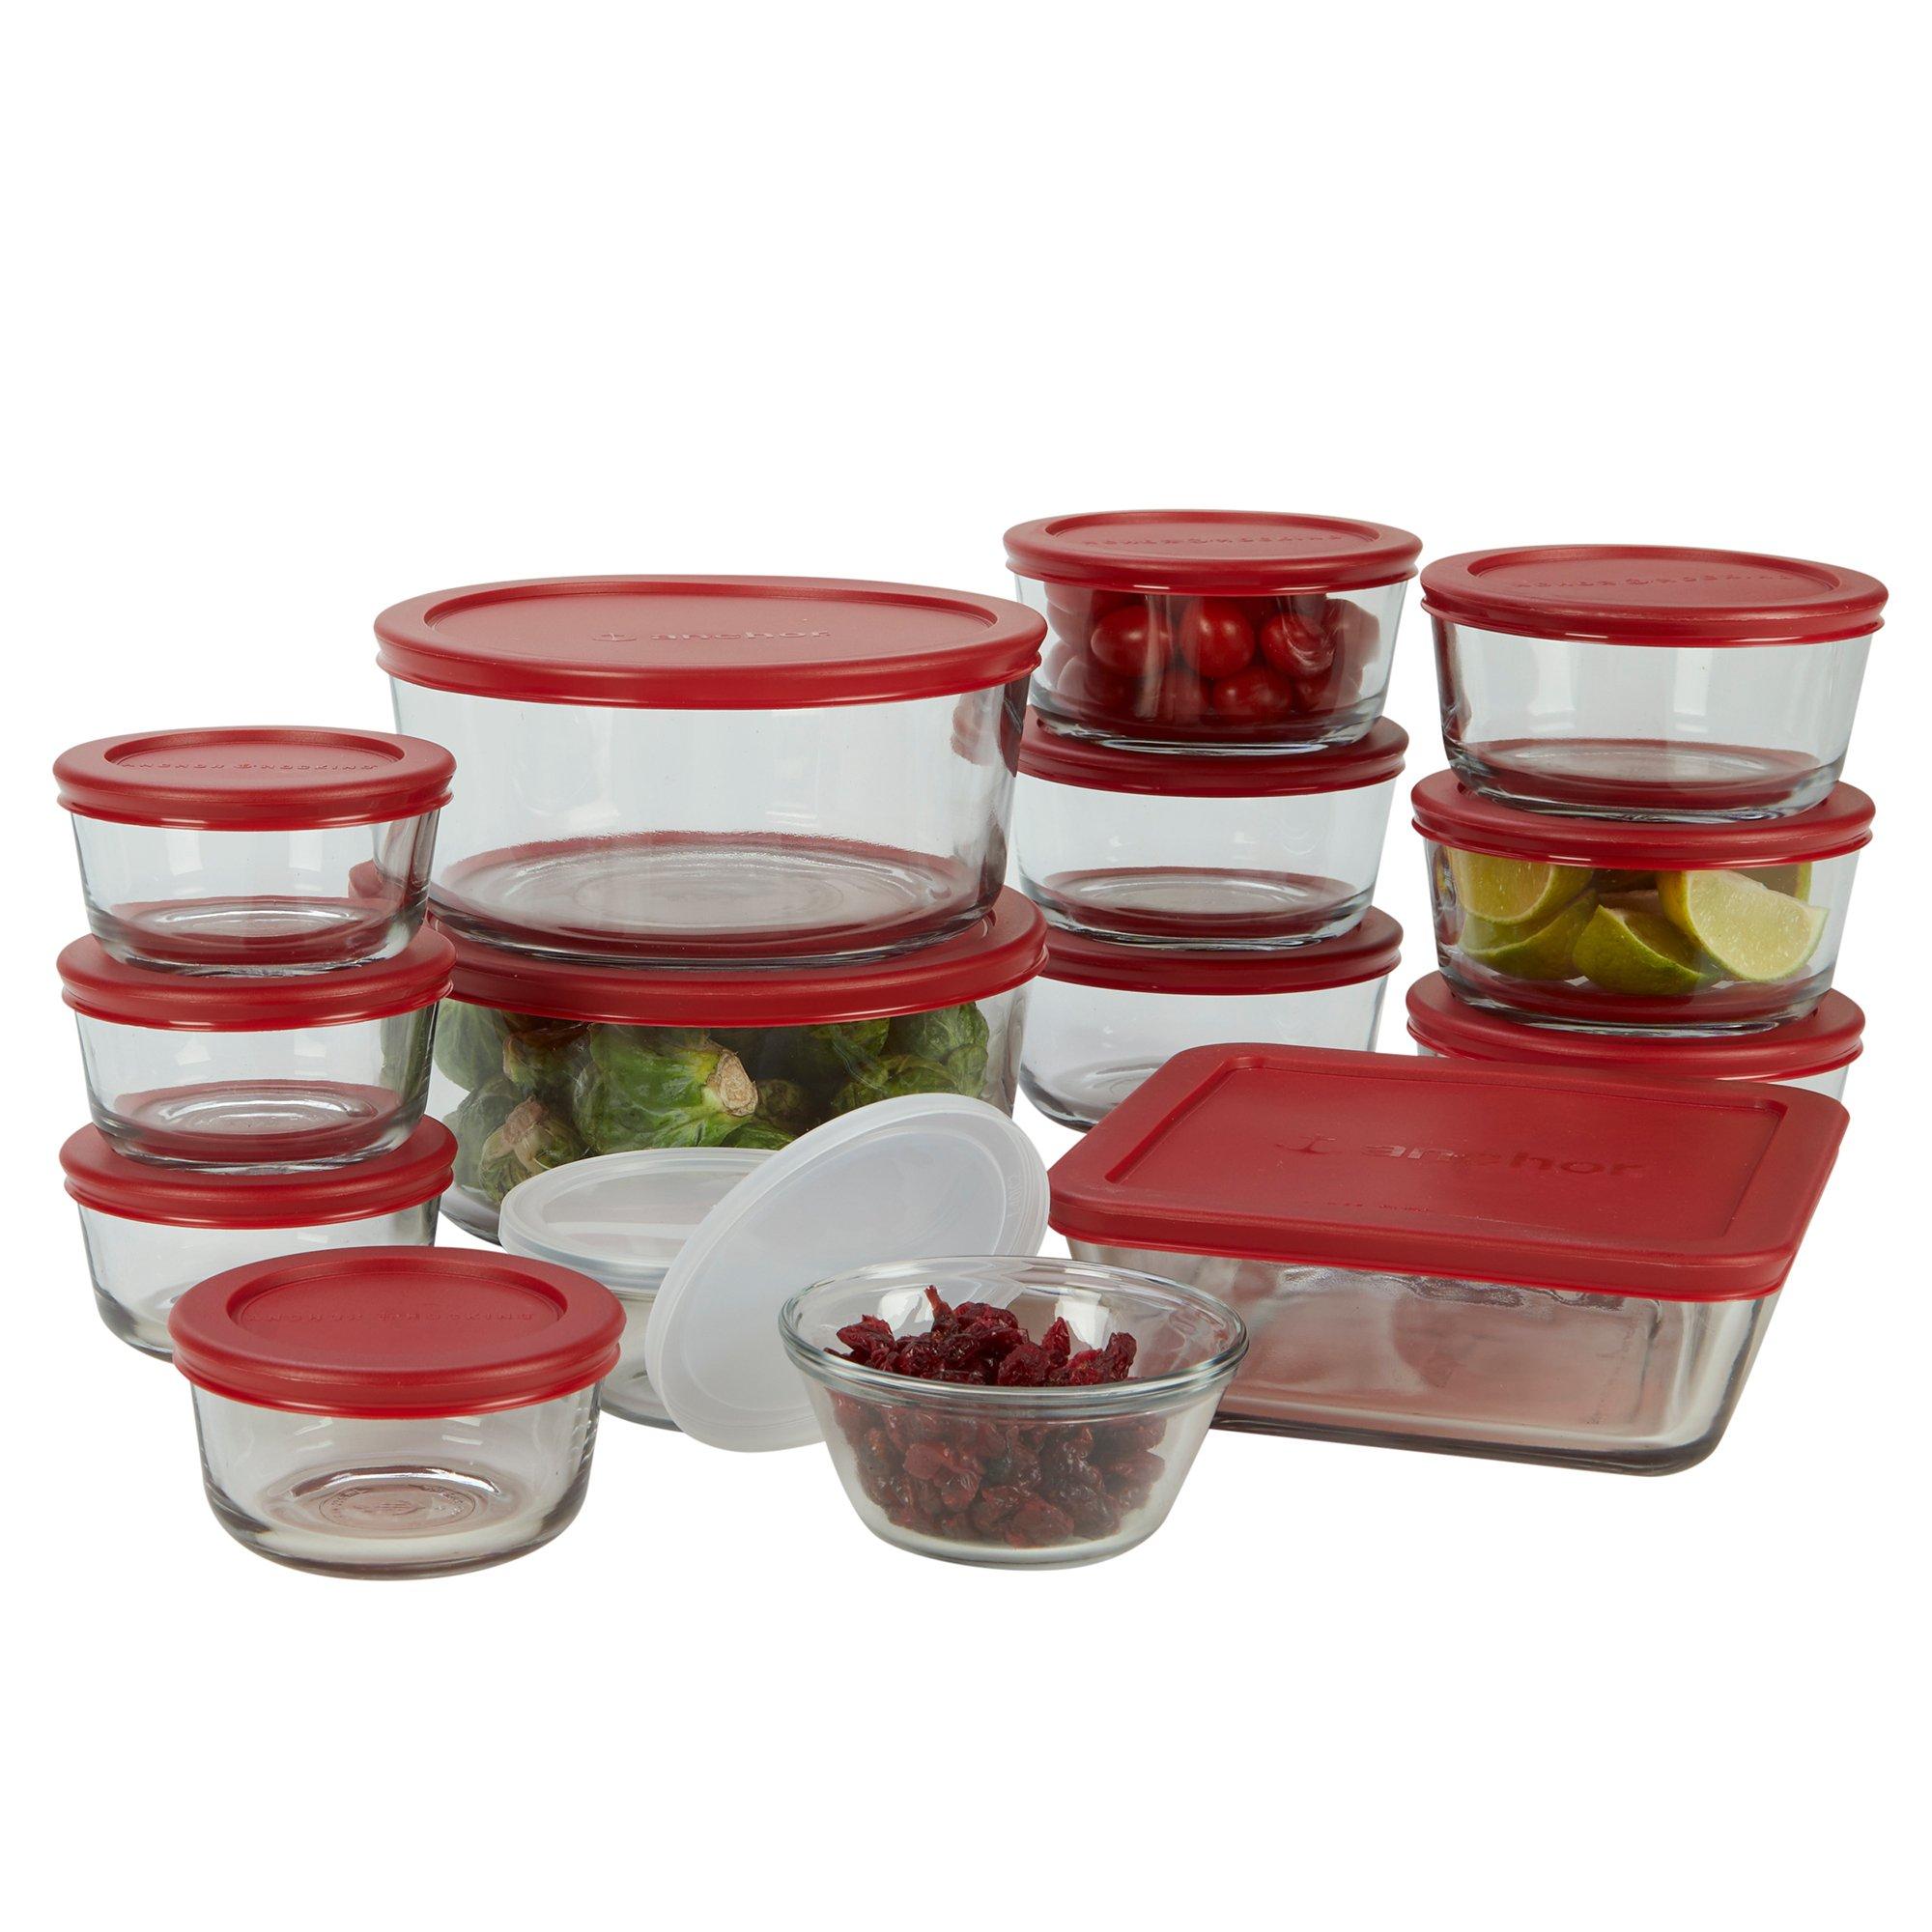 https://images.beallsflorida.com/i/beallsflorida/653-6131-0425-60-yyy/*30-Pc-Glass-Food-Storage-Set-with-Cherry-Lids*?$BR_thumbnail$&fmt=auto&qlt=default